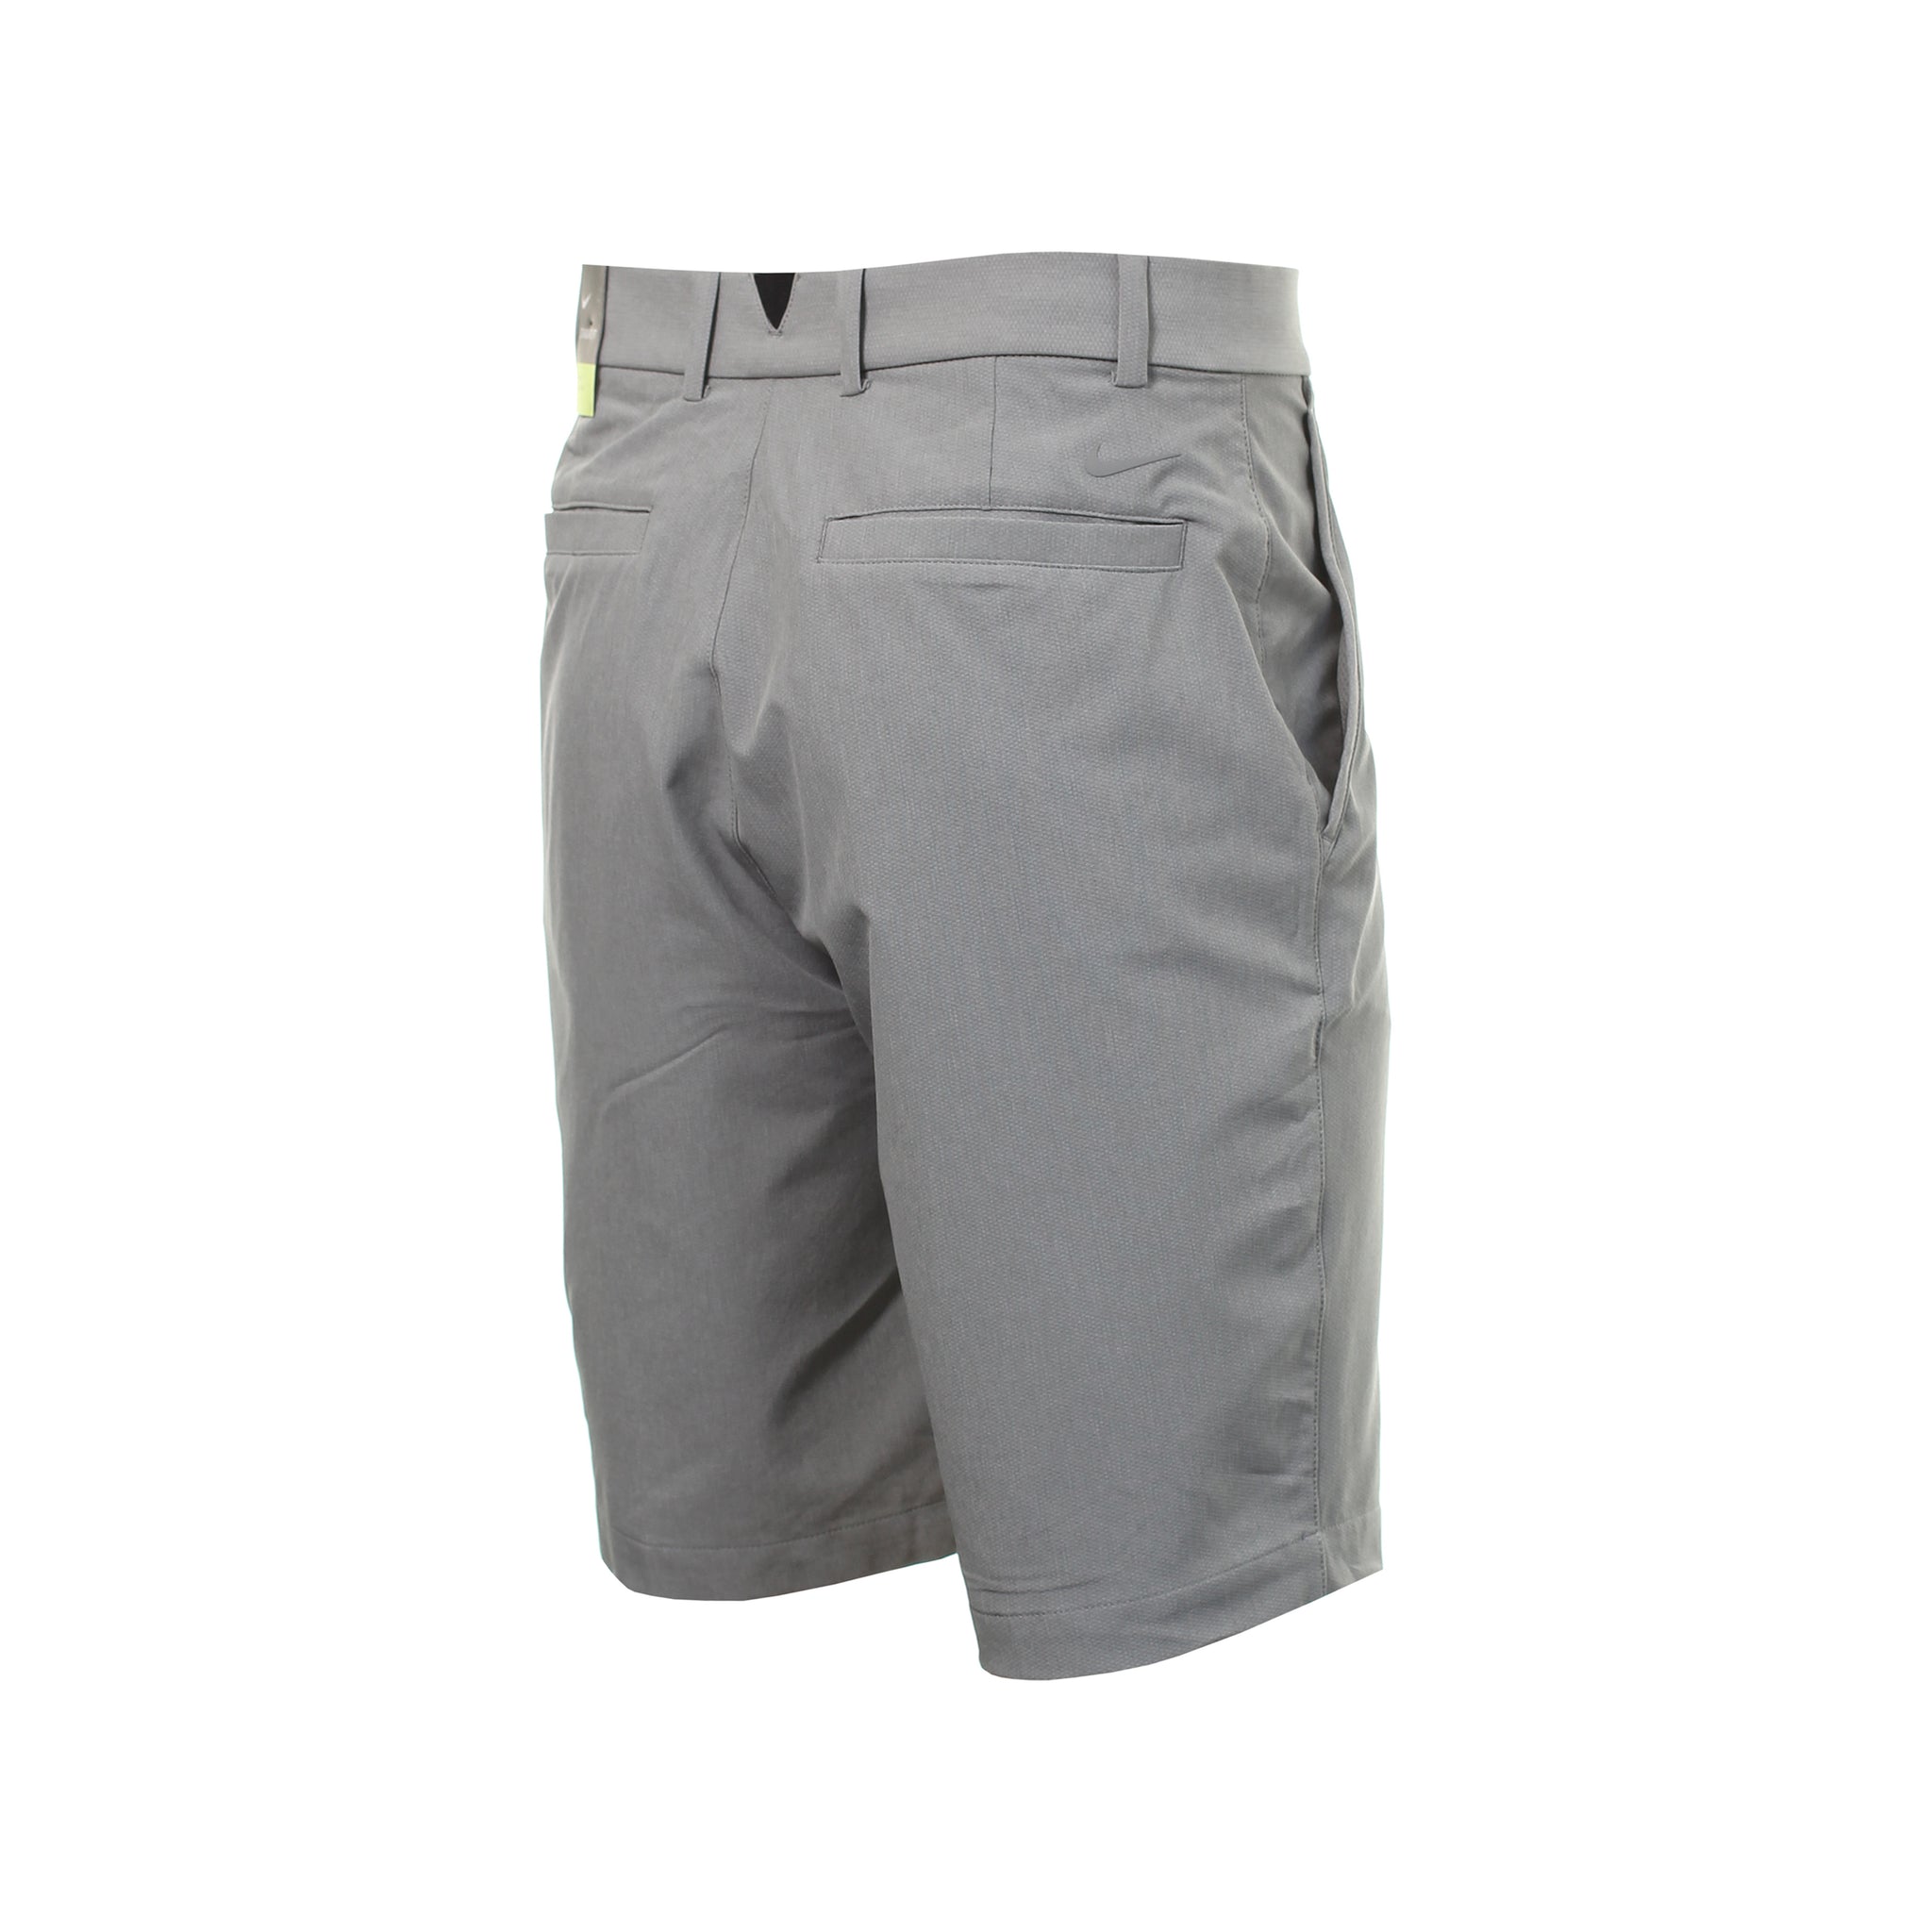 nike-golf-hybrid-shorts-cu9740-photon-dust-003